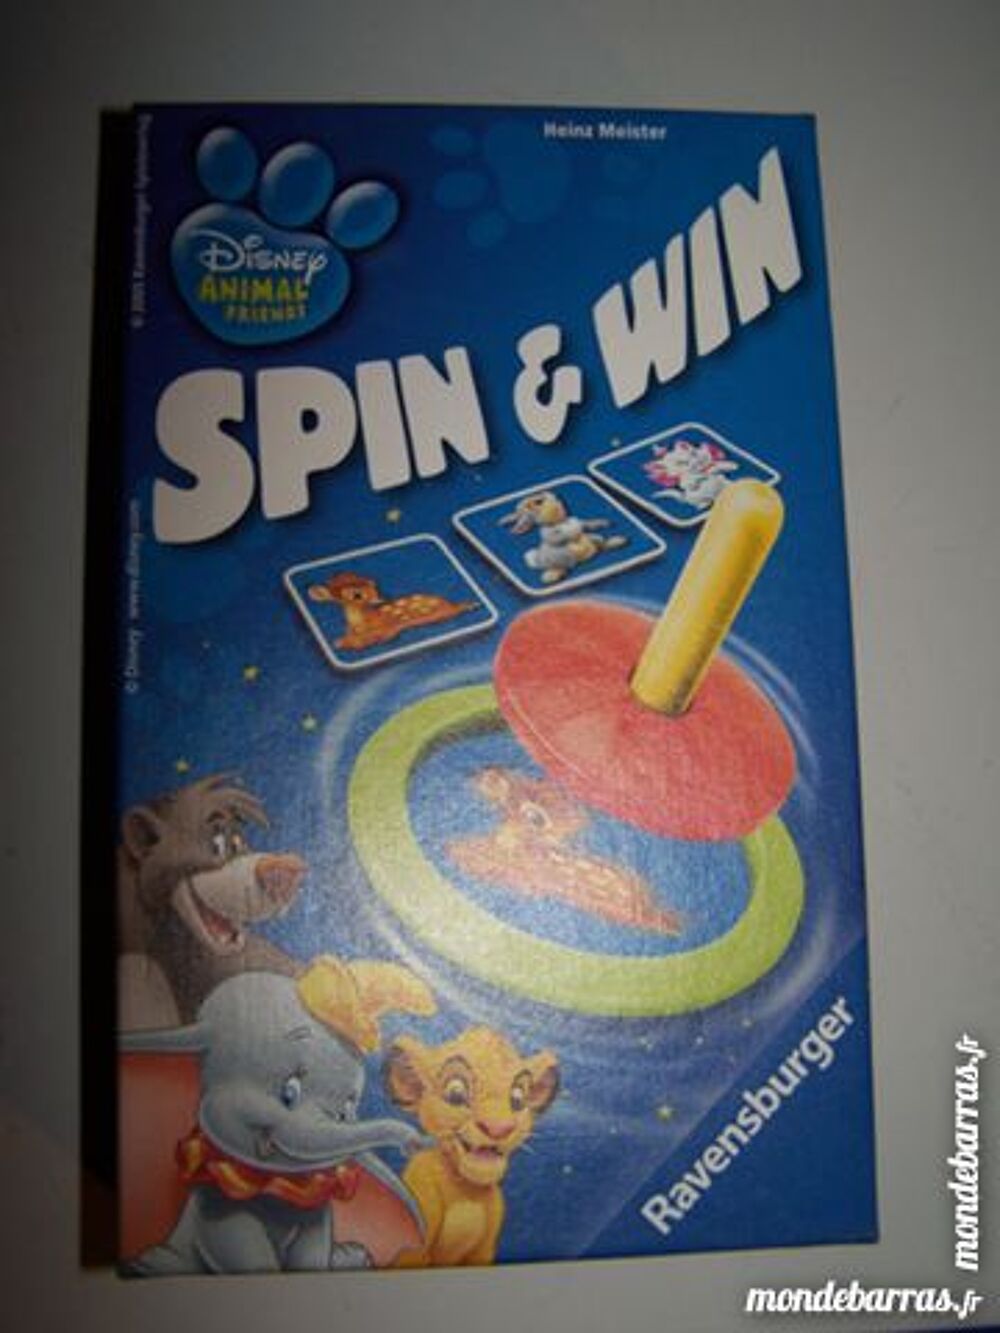 Jeu Ravensburger &laquo; Spin Win &raquo;Disney Animal Friend Jeux / jouets